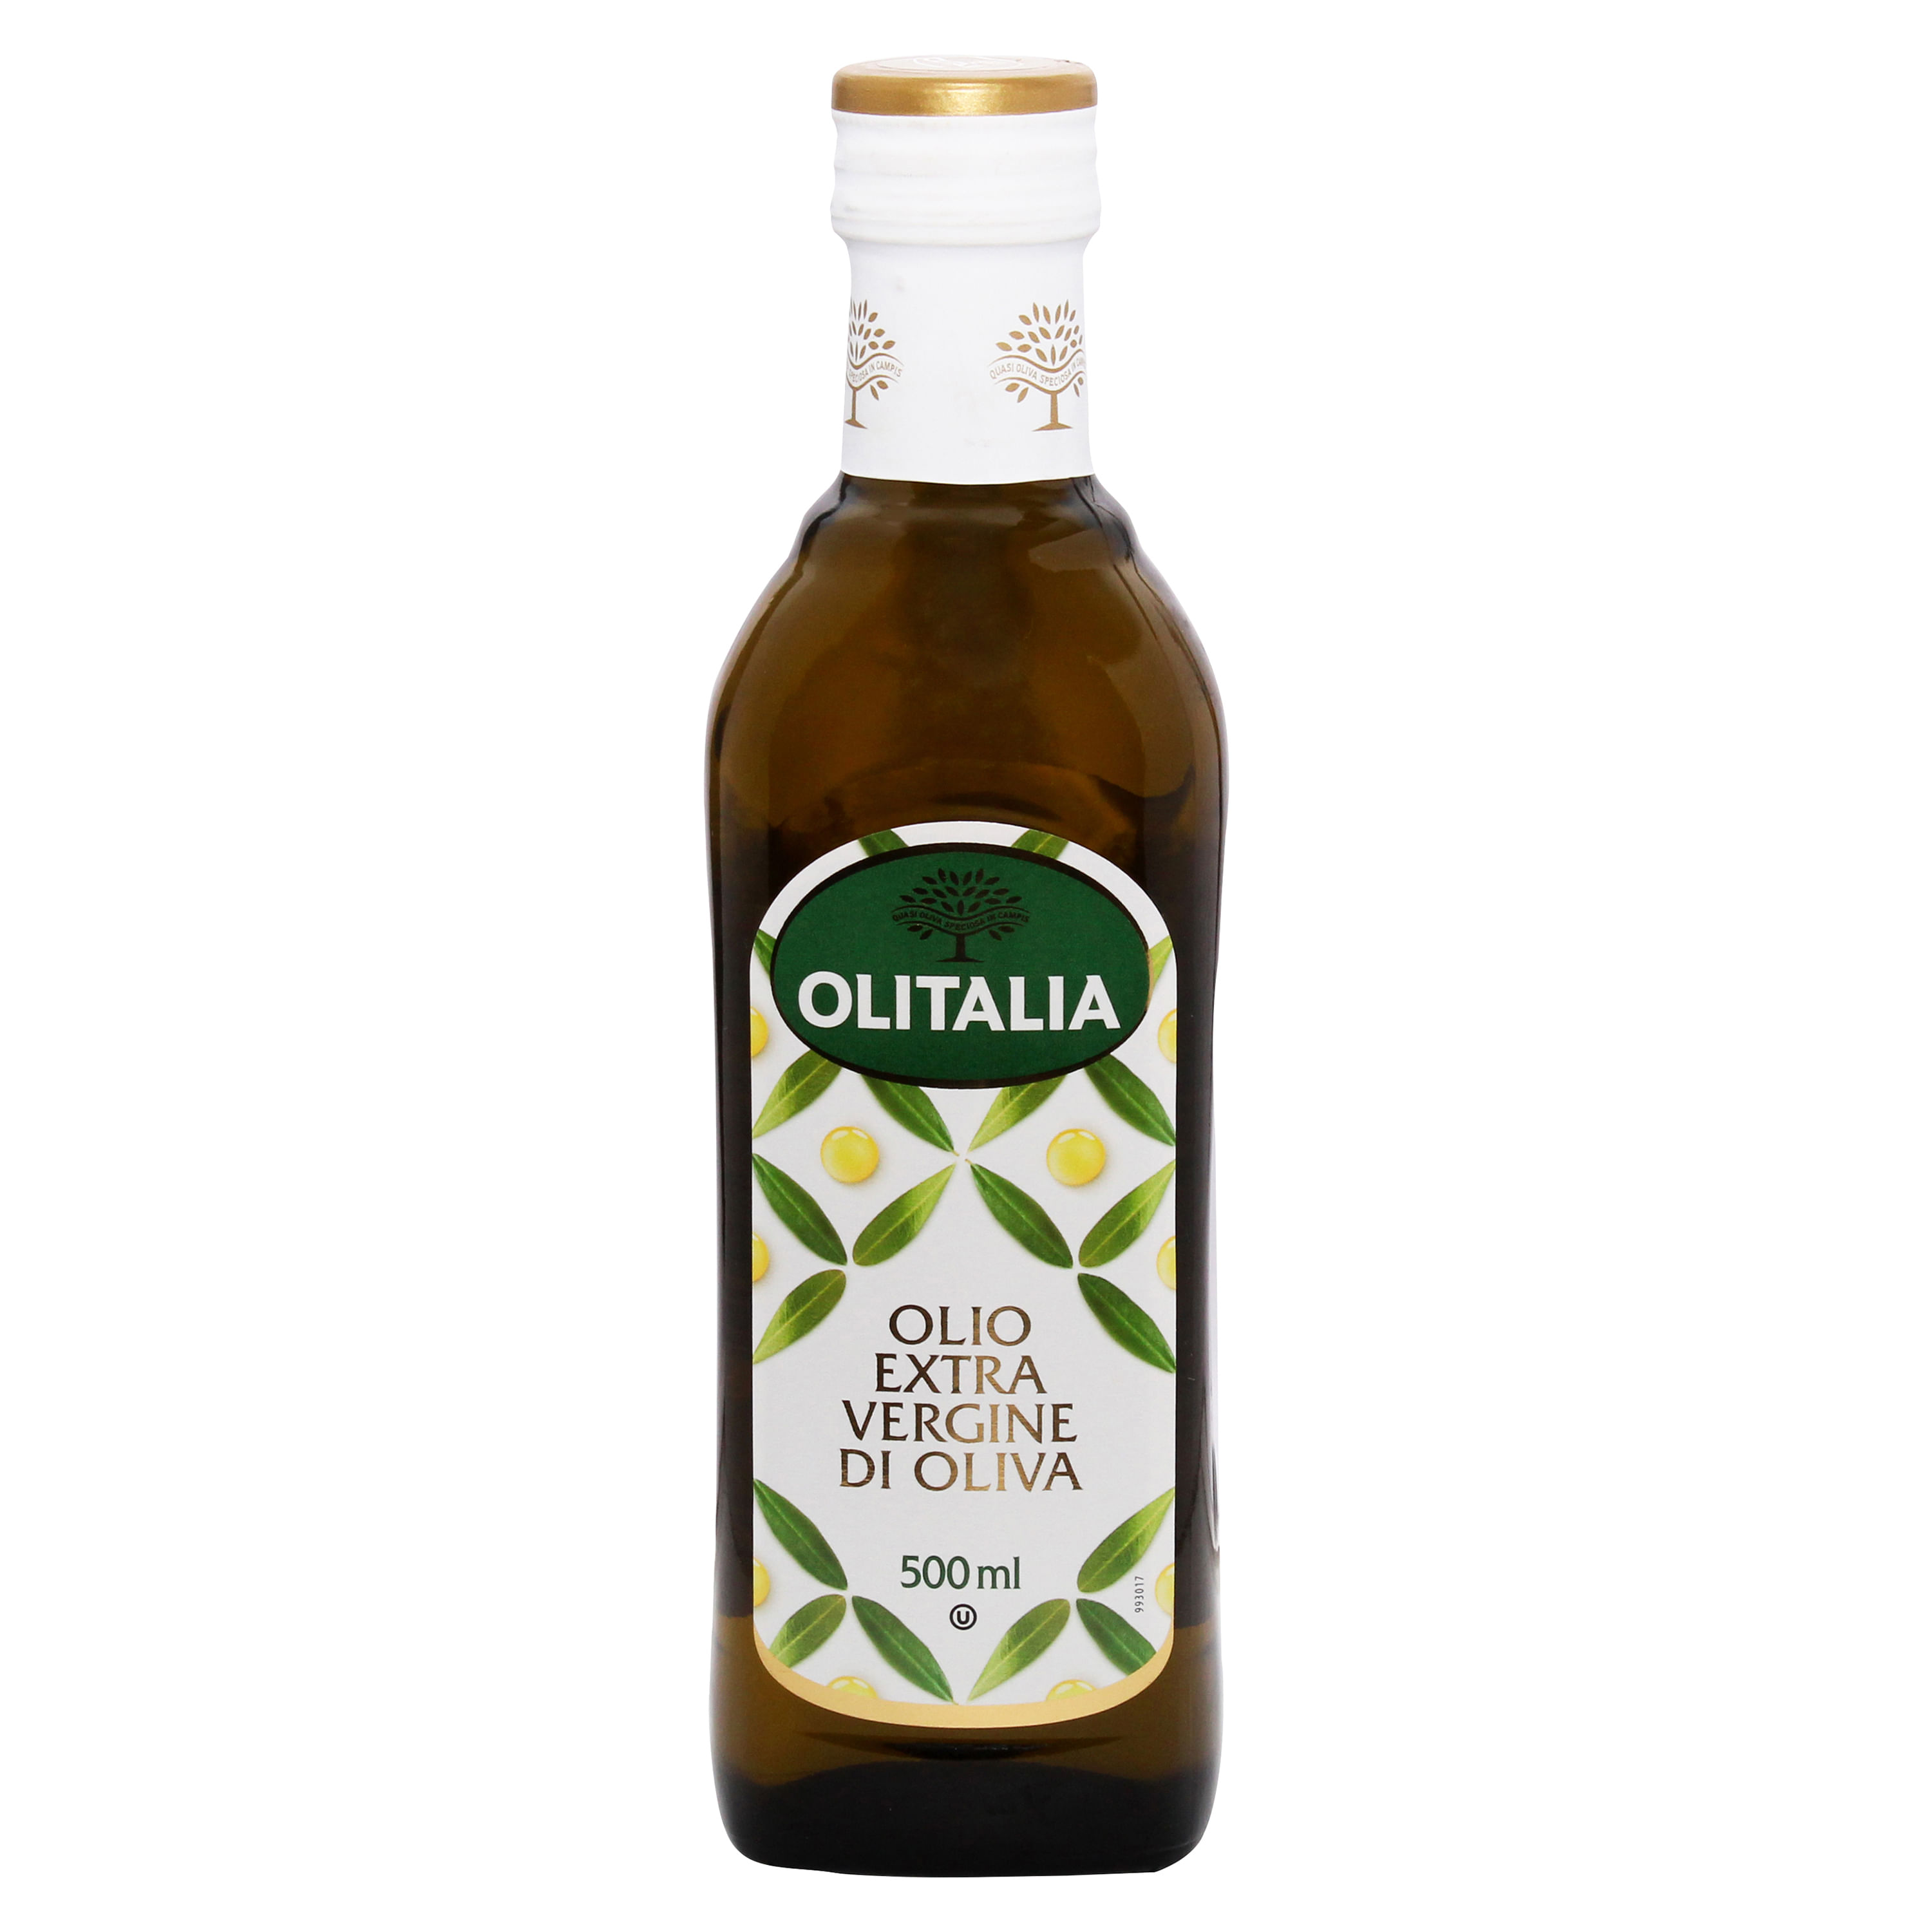 Aceite de oliva Great Value extra virgen 500 ml